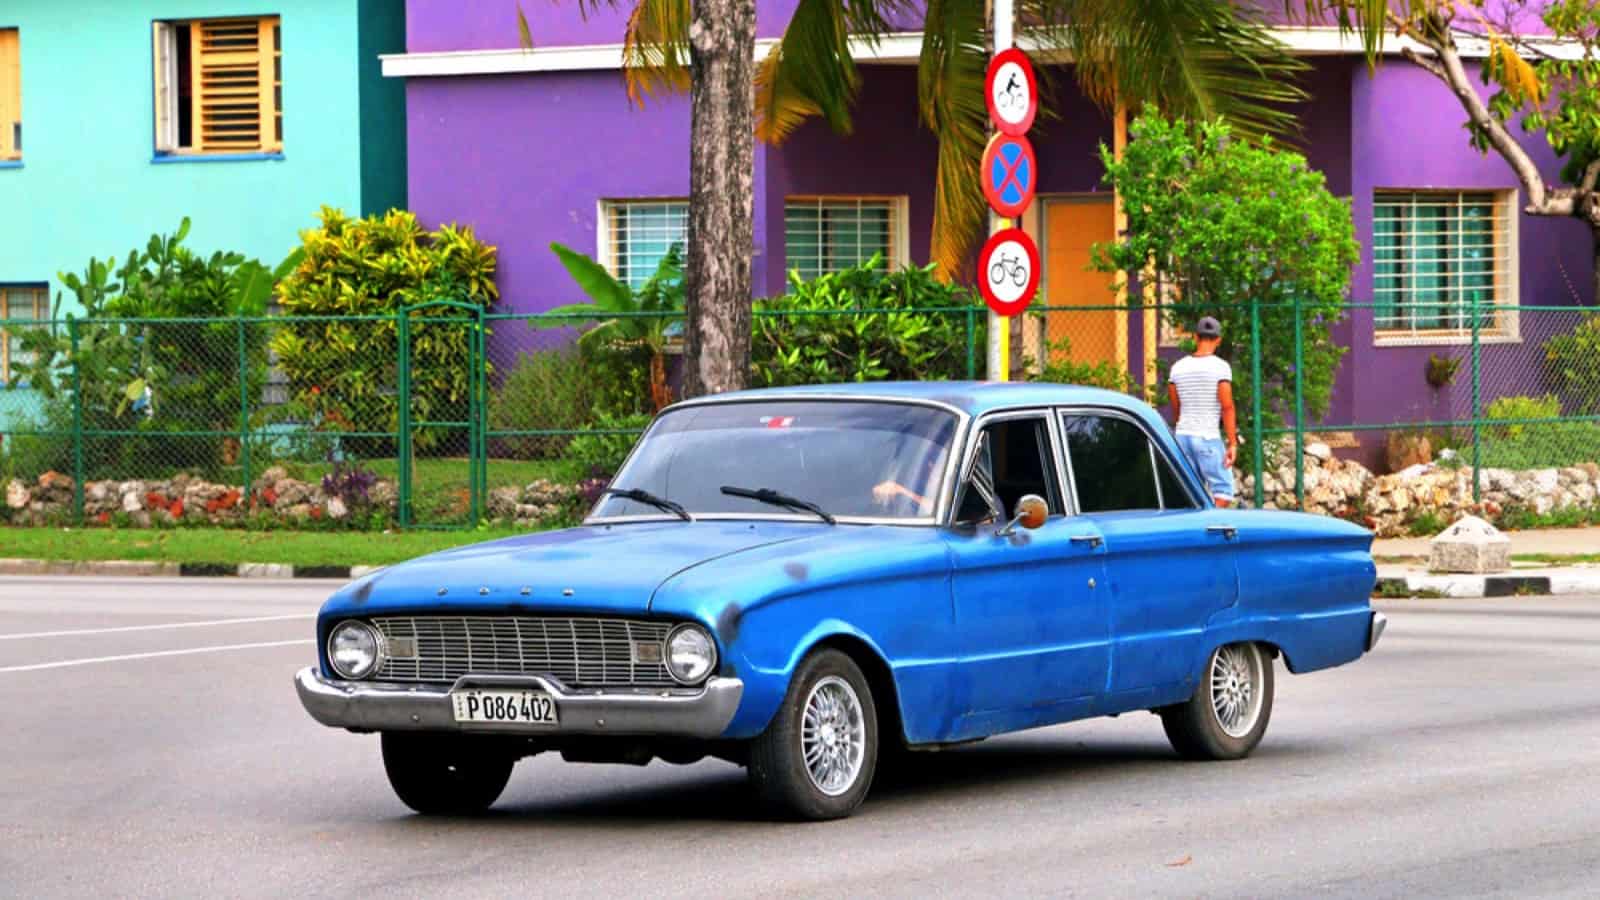 Havana, Cuba - June 6, 2017: Old American motor Ford Falcon in the city street.